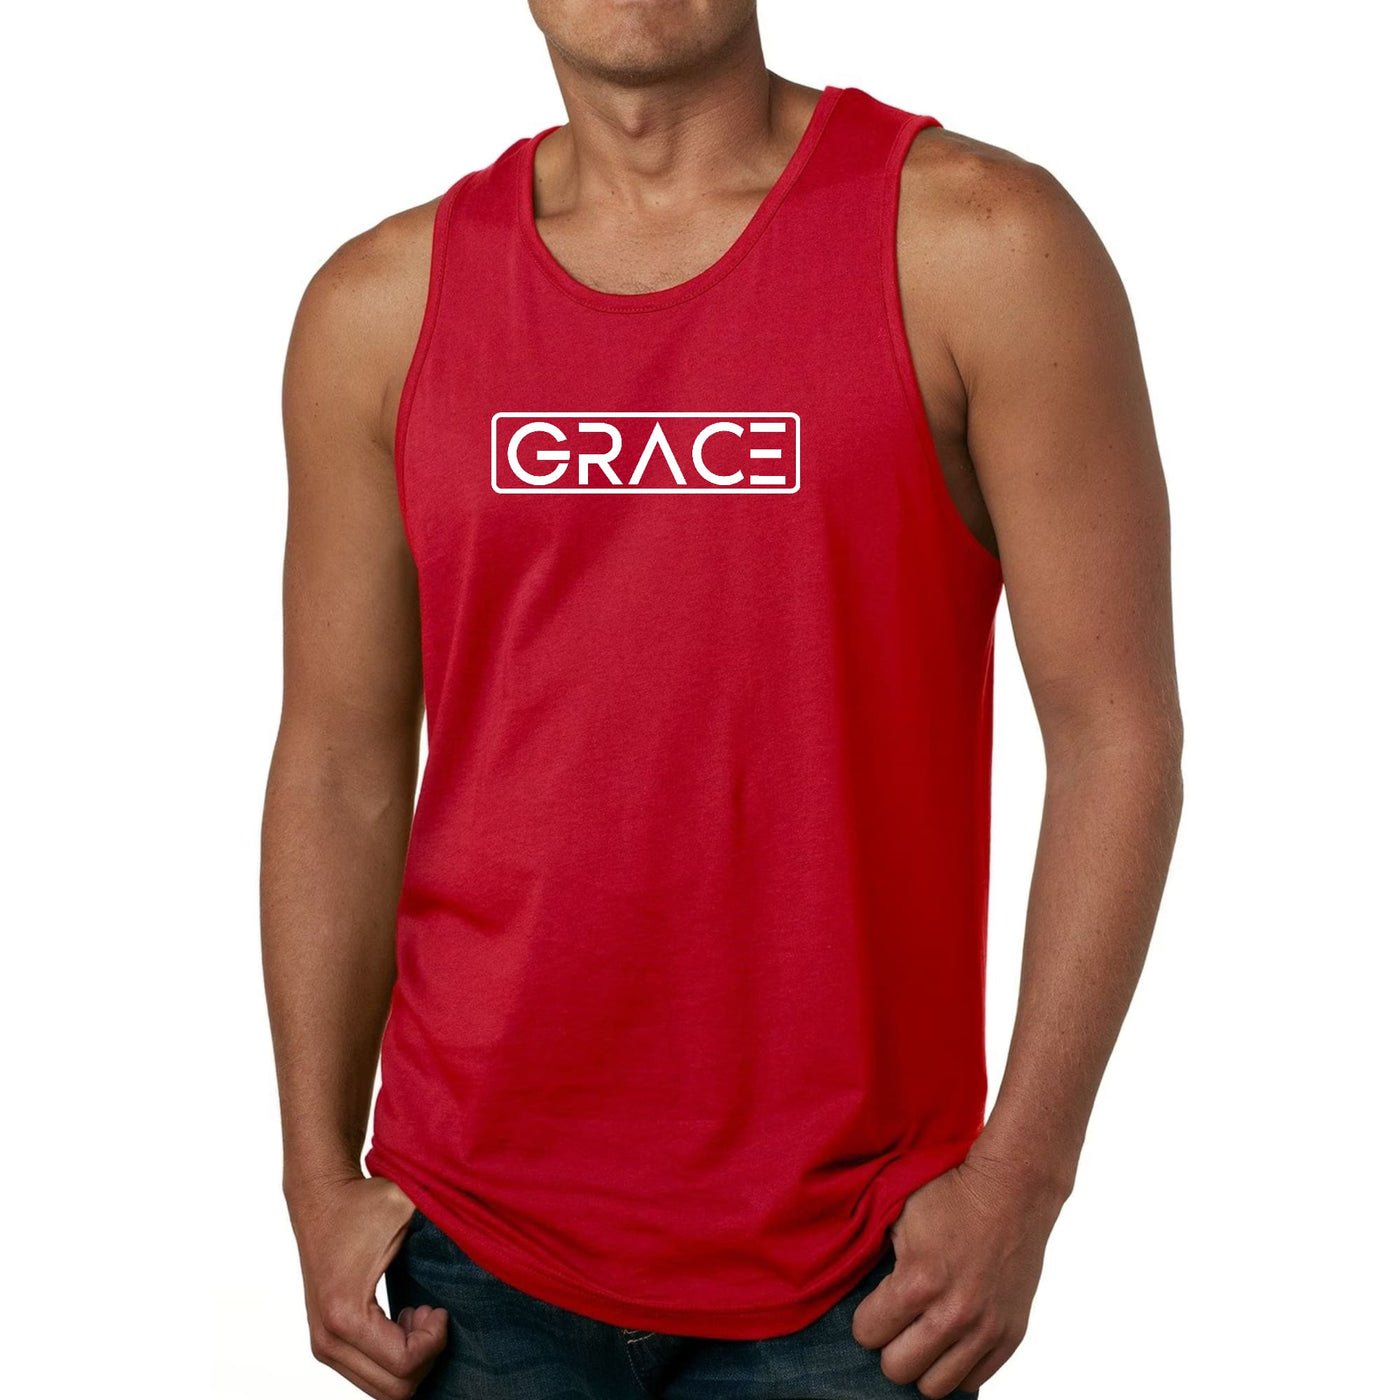 Mens Tank Top Fitness T - shirt Grace - Tops